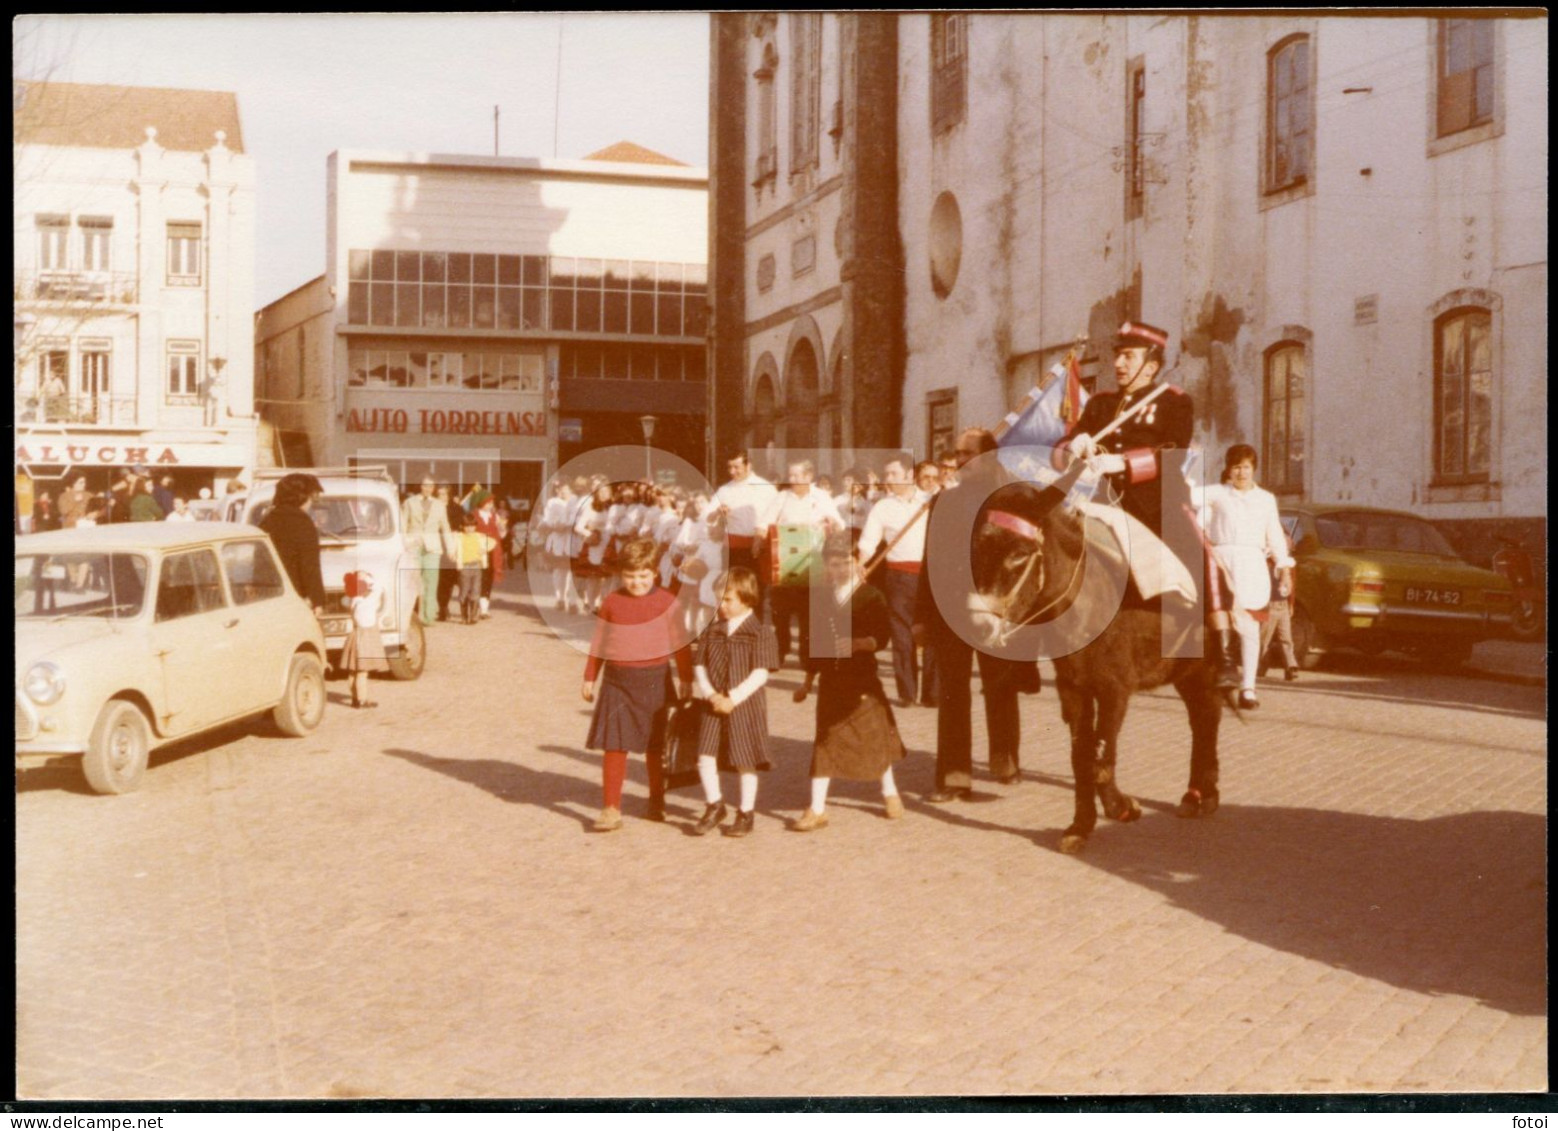 5 PHOTOS SET 1979 REAL AMATEUR FOTO PHOTO CARNIVAL CARNAVAL TORRES VEDRAS PORTUGAL AT344 - Afrika